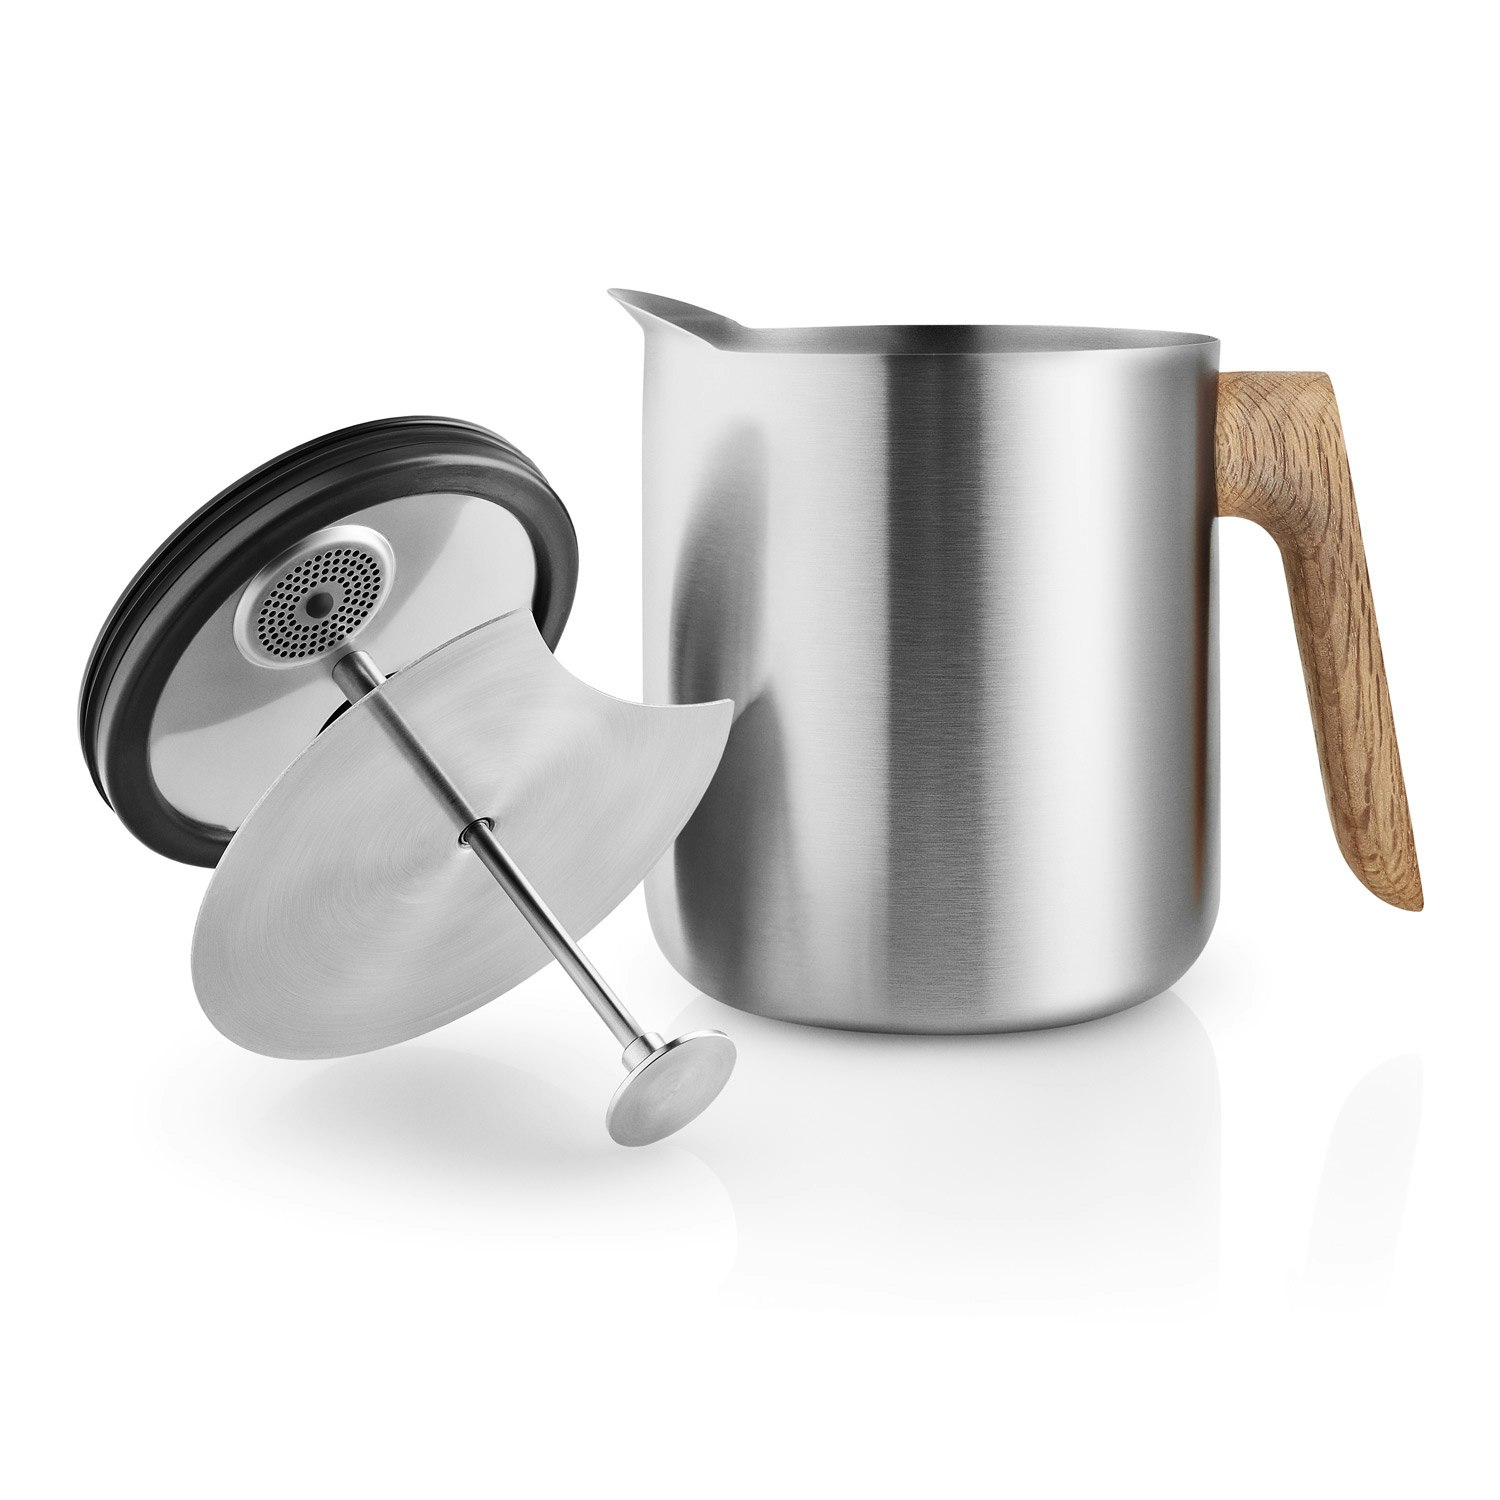 https://royaldesign.com/image/2/eva-solo-nordic-kitchen-tea-french-press-1-l-1